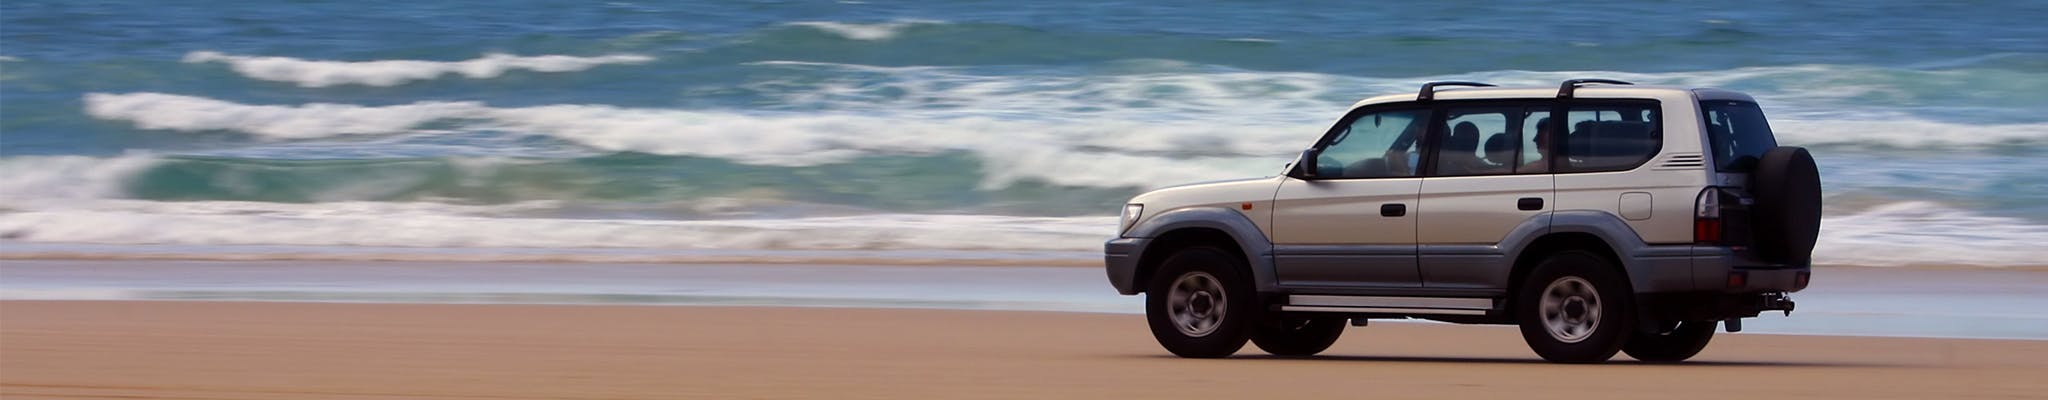 4x4 vehicle driving on a beach